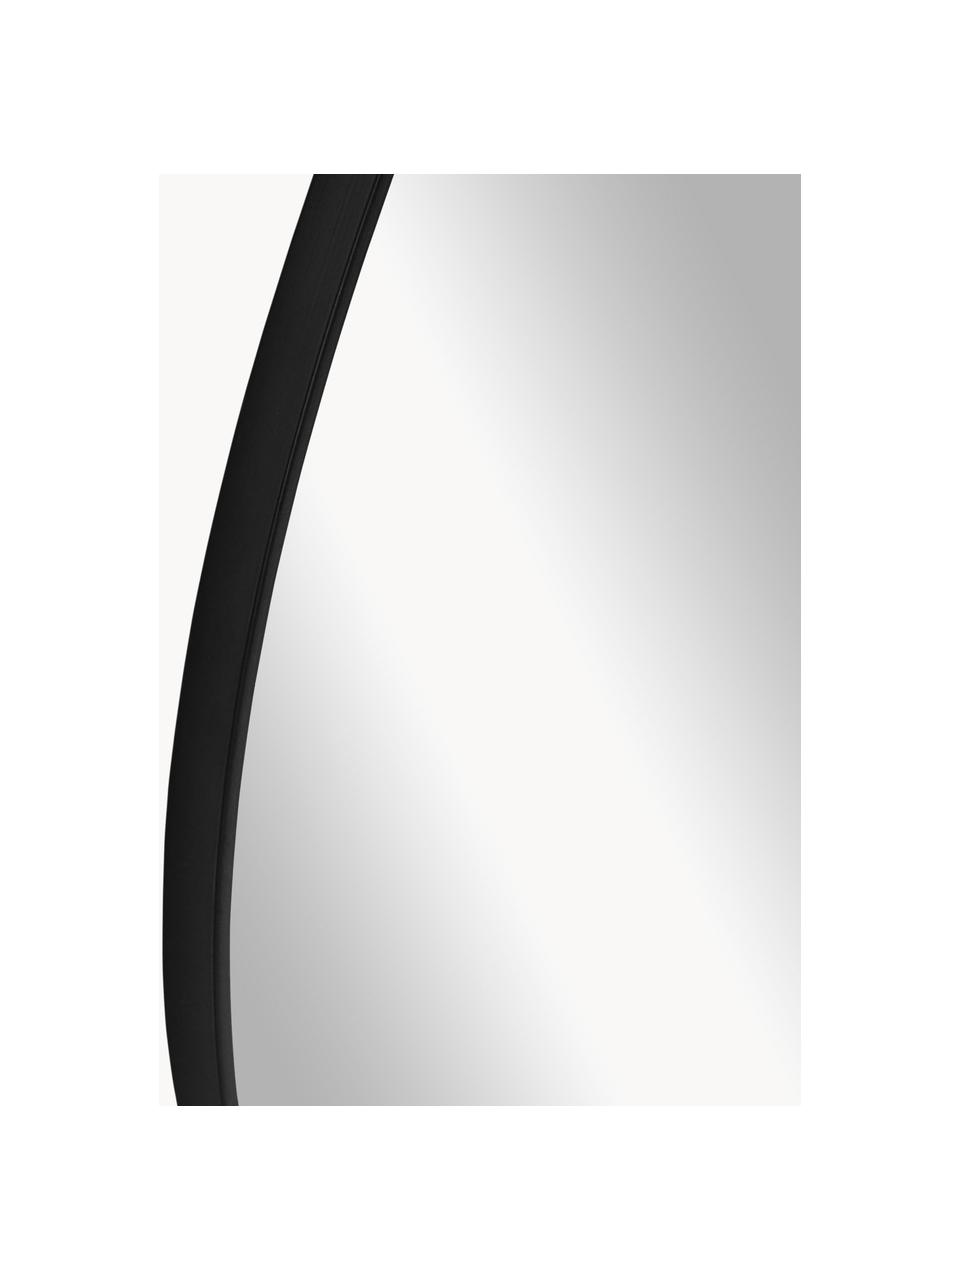 Nástěnné zrcadlo v organickém tvaru Anera, Černá, Š 93 cm, V 90 cm